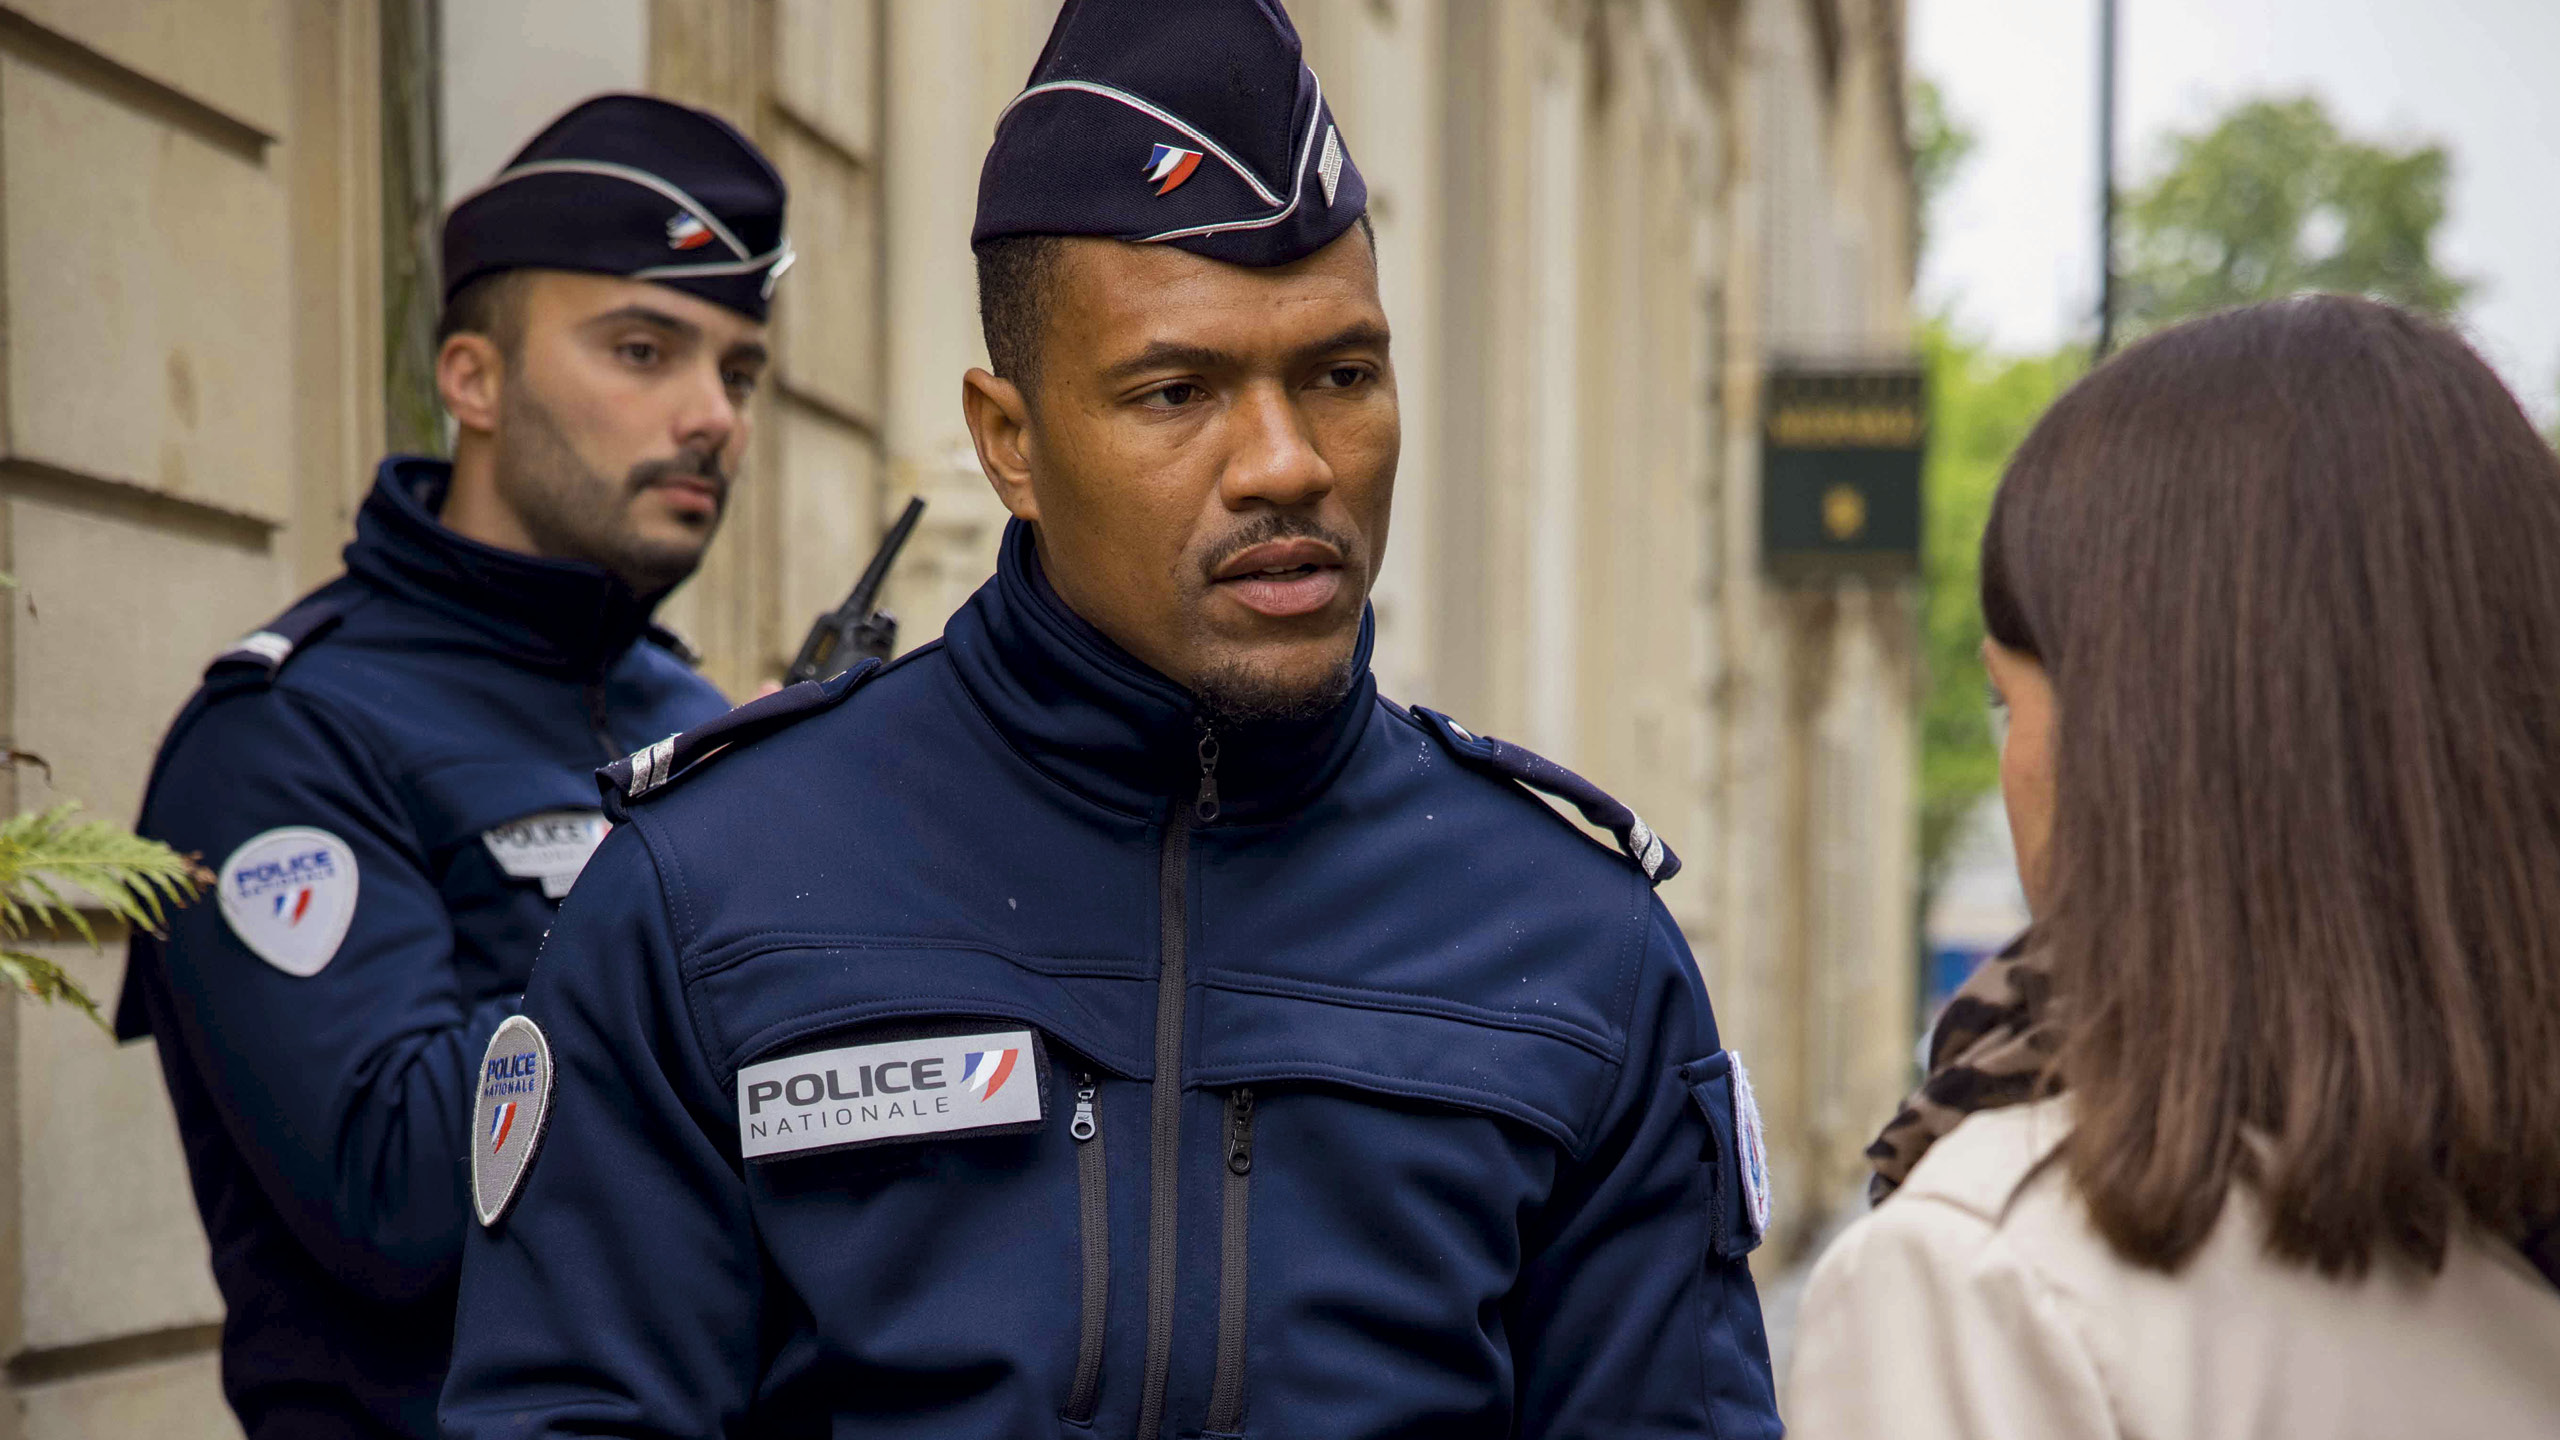 Police nationale (France) — Wikipédia